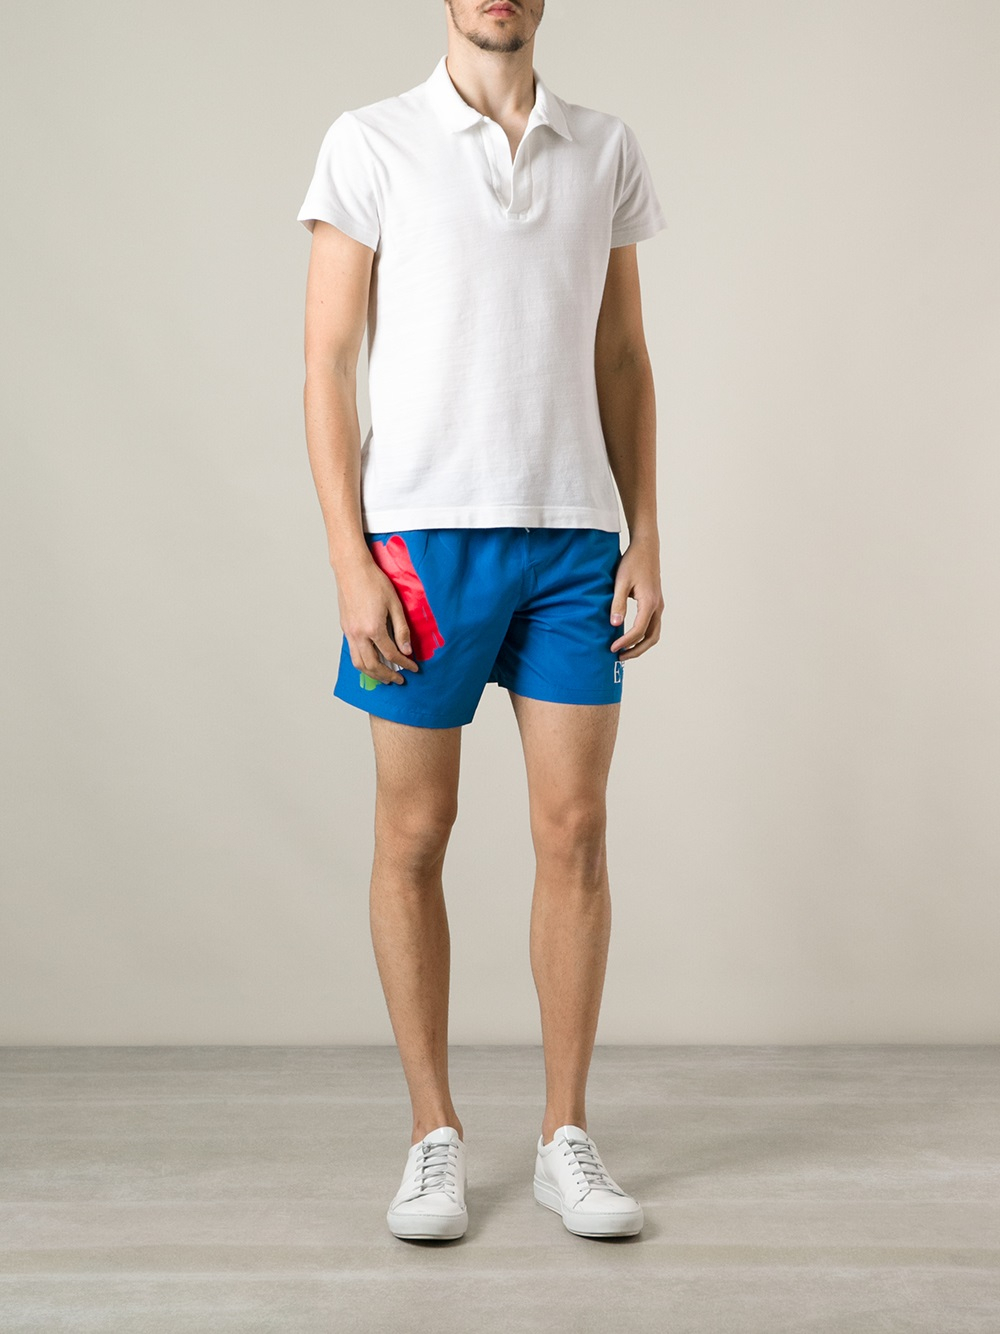 Lyst - Emporio Armani Italian Flag Swim Shorts in Blue for Men